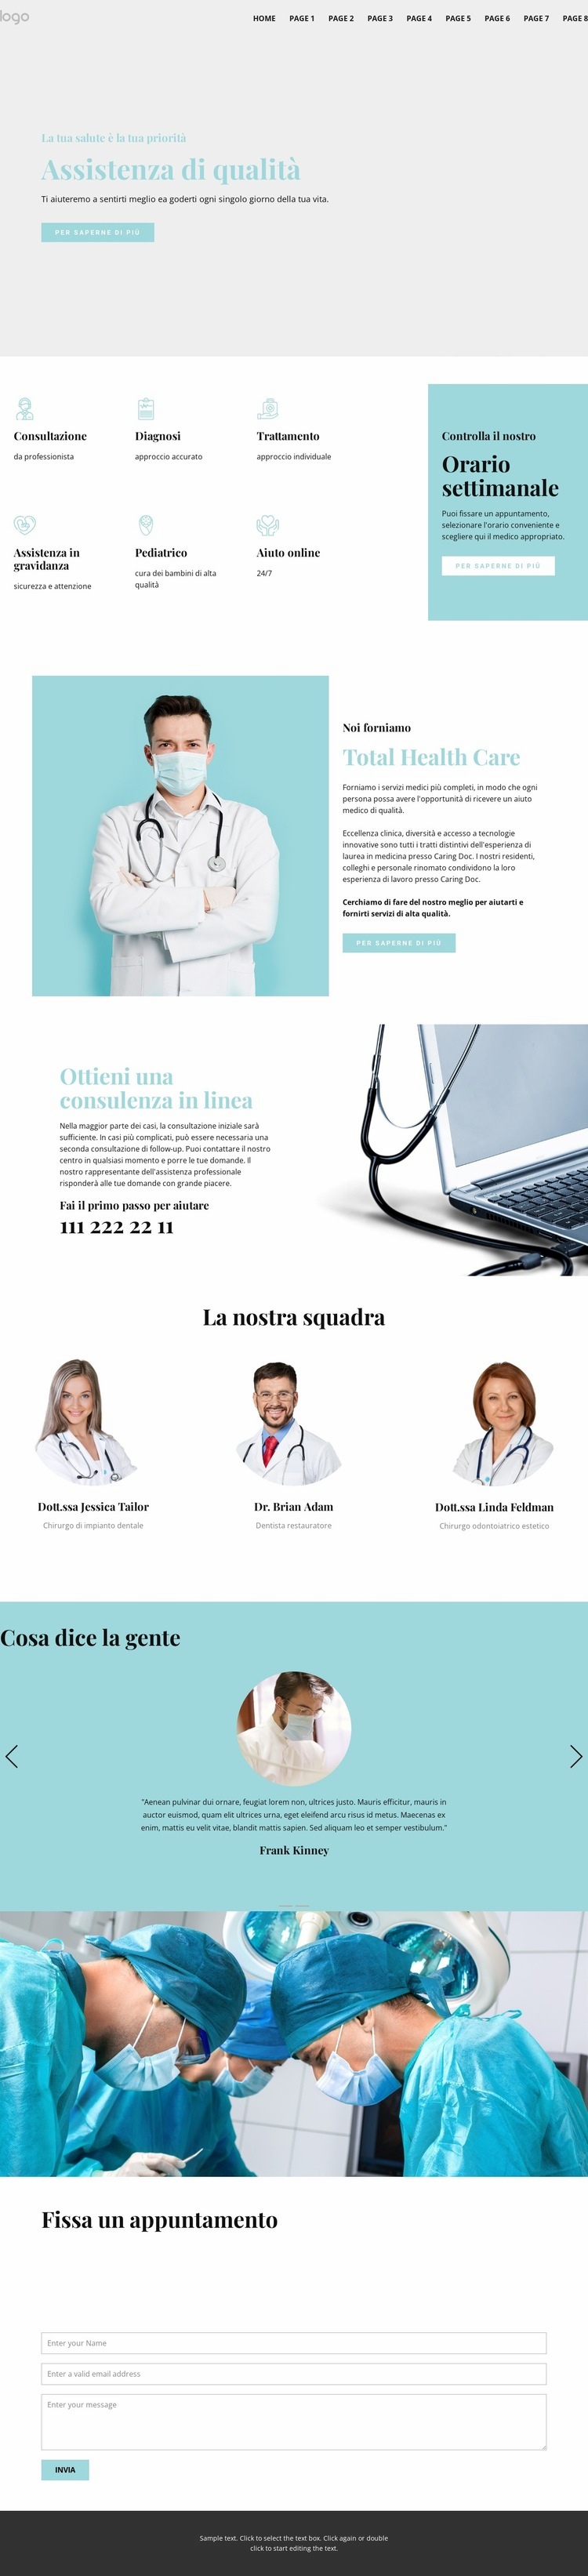 Assistenza medica di qualità Progettazione di siti web